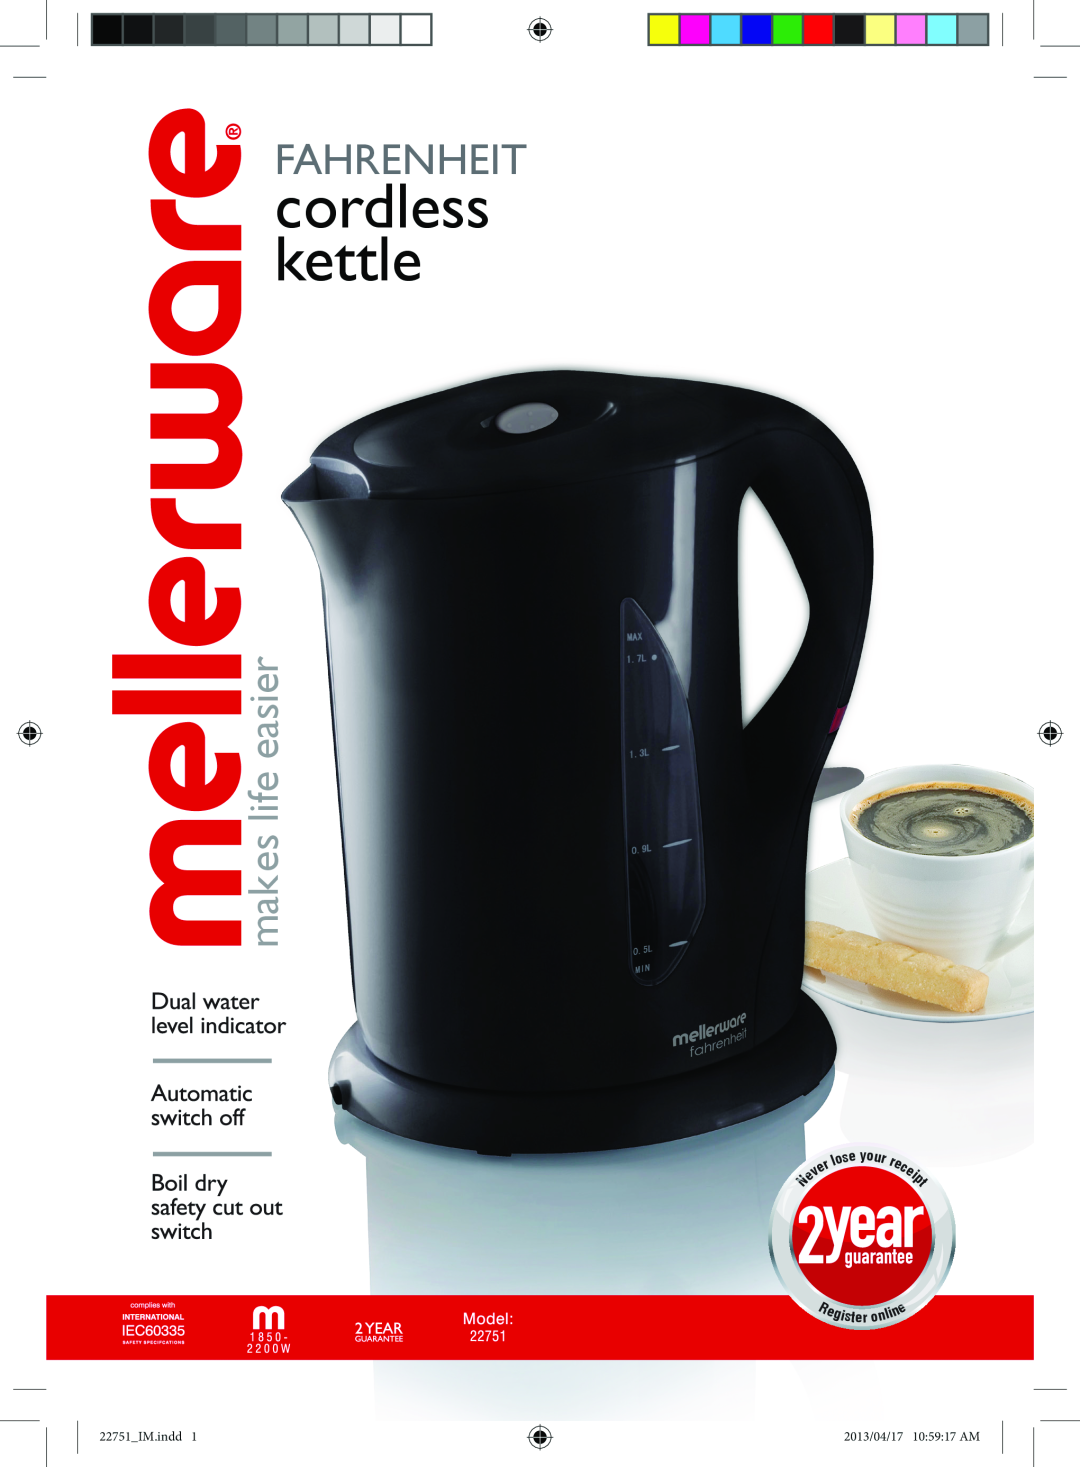 Mellerware 22751 manual cordless kettle, Fahrenheit, makes life easier, recei p t 